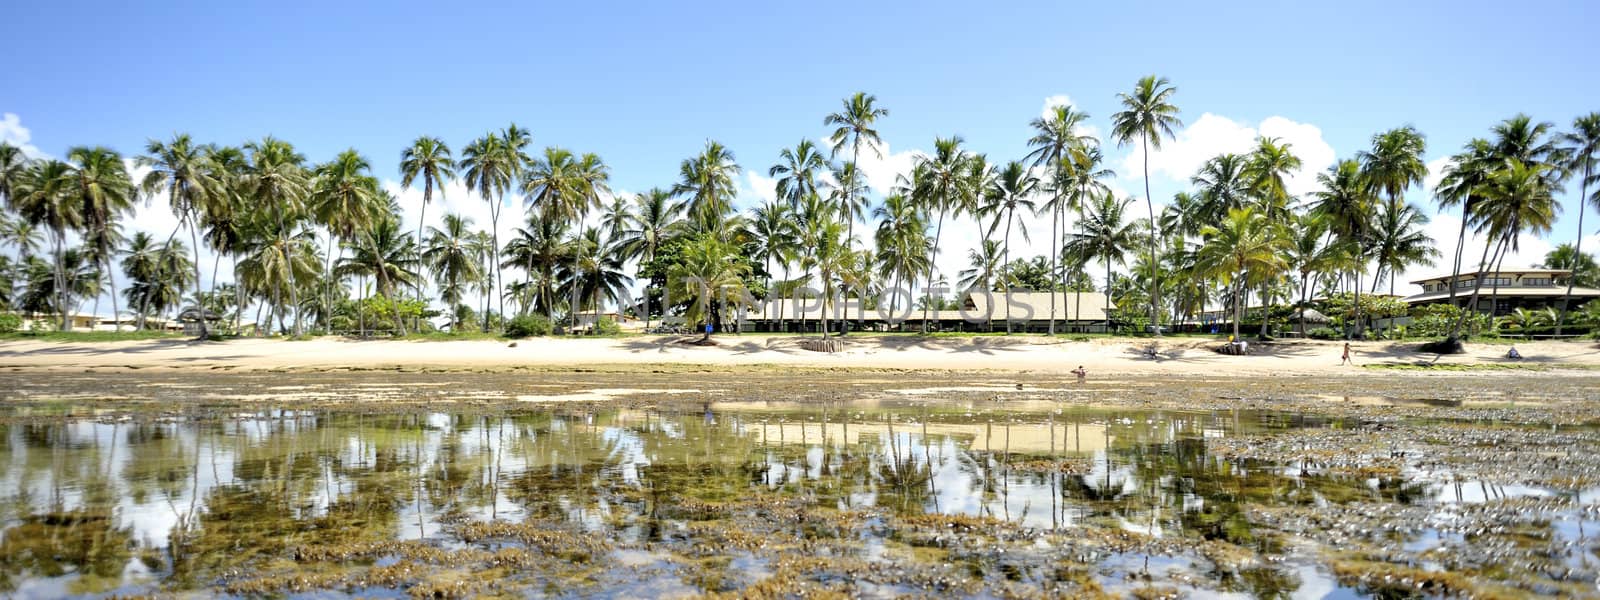 Praia do forte in Salavador de Bahia state, Brazil